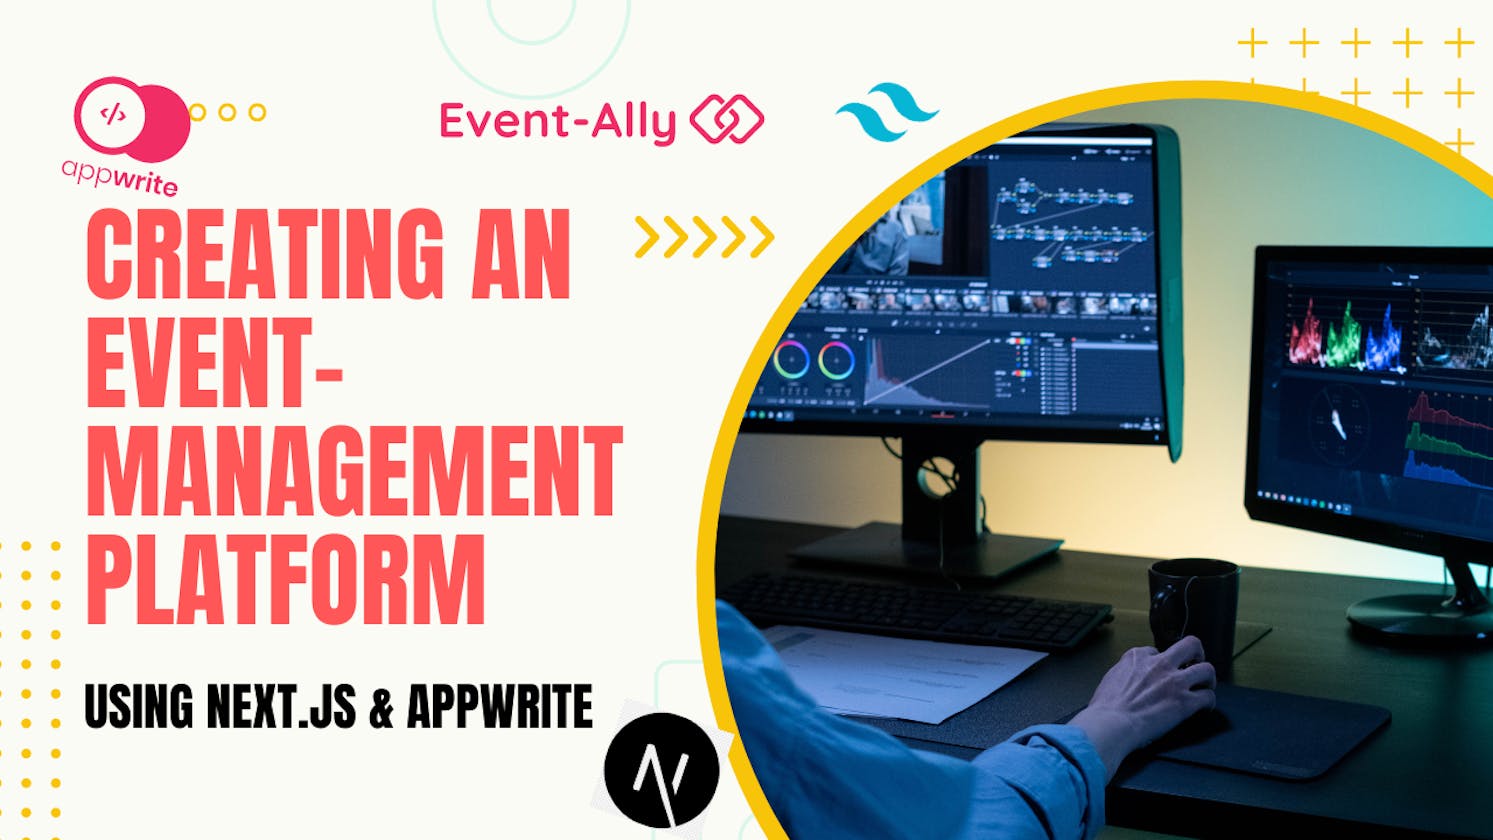 Event-Ally: Build an Event Planning Platform using Next.js & Appwrite